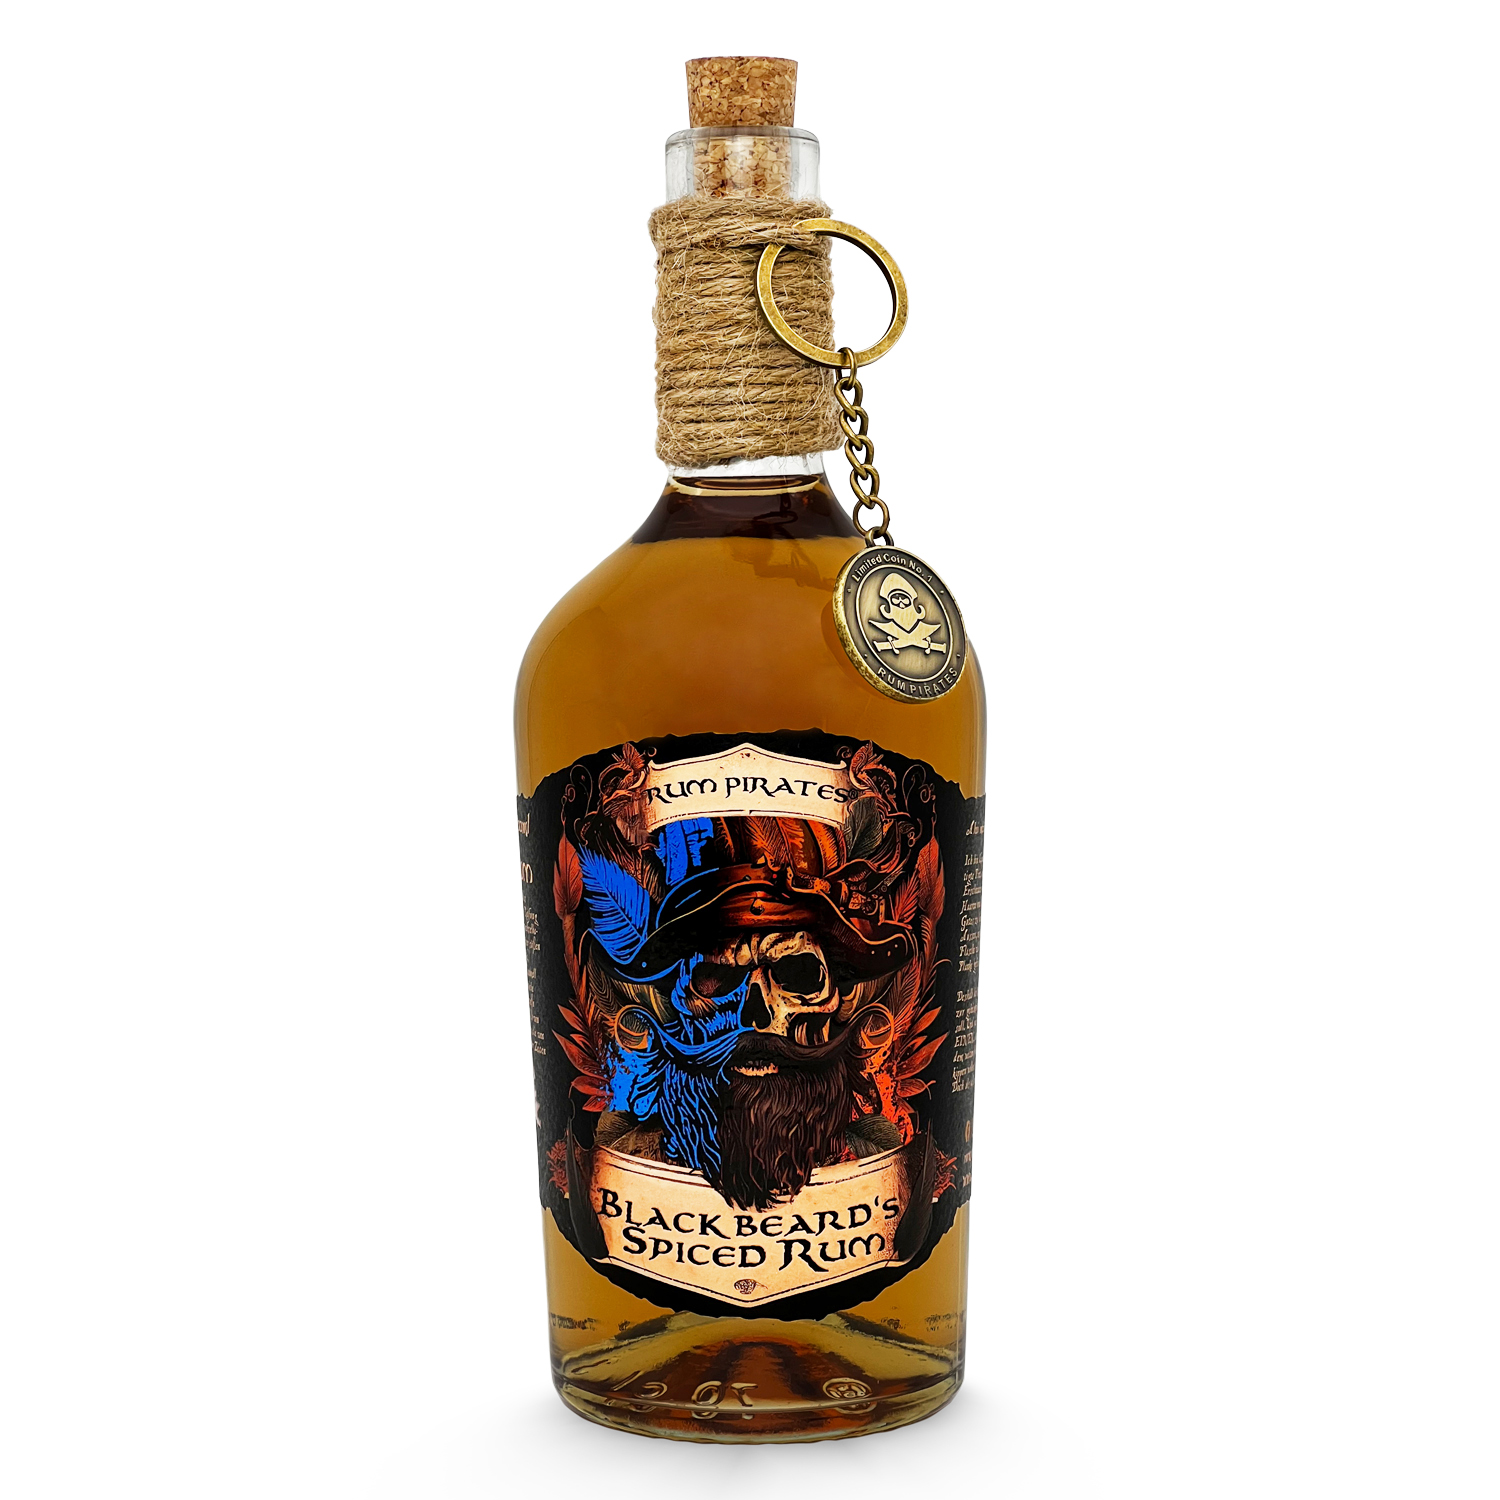 Blackbeard‘s Spiced Rum 40%, Rum Pirates, 0,7 l